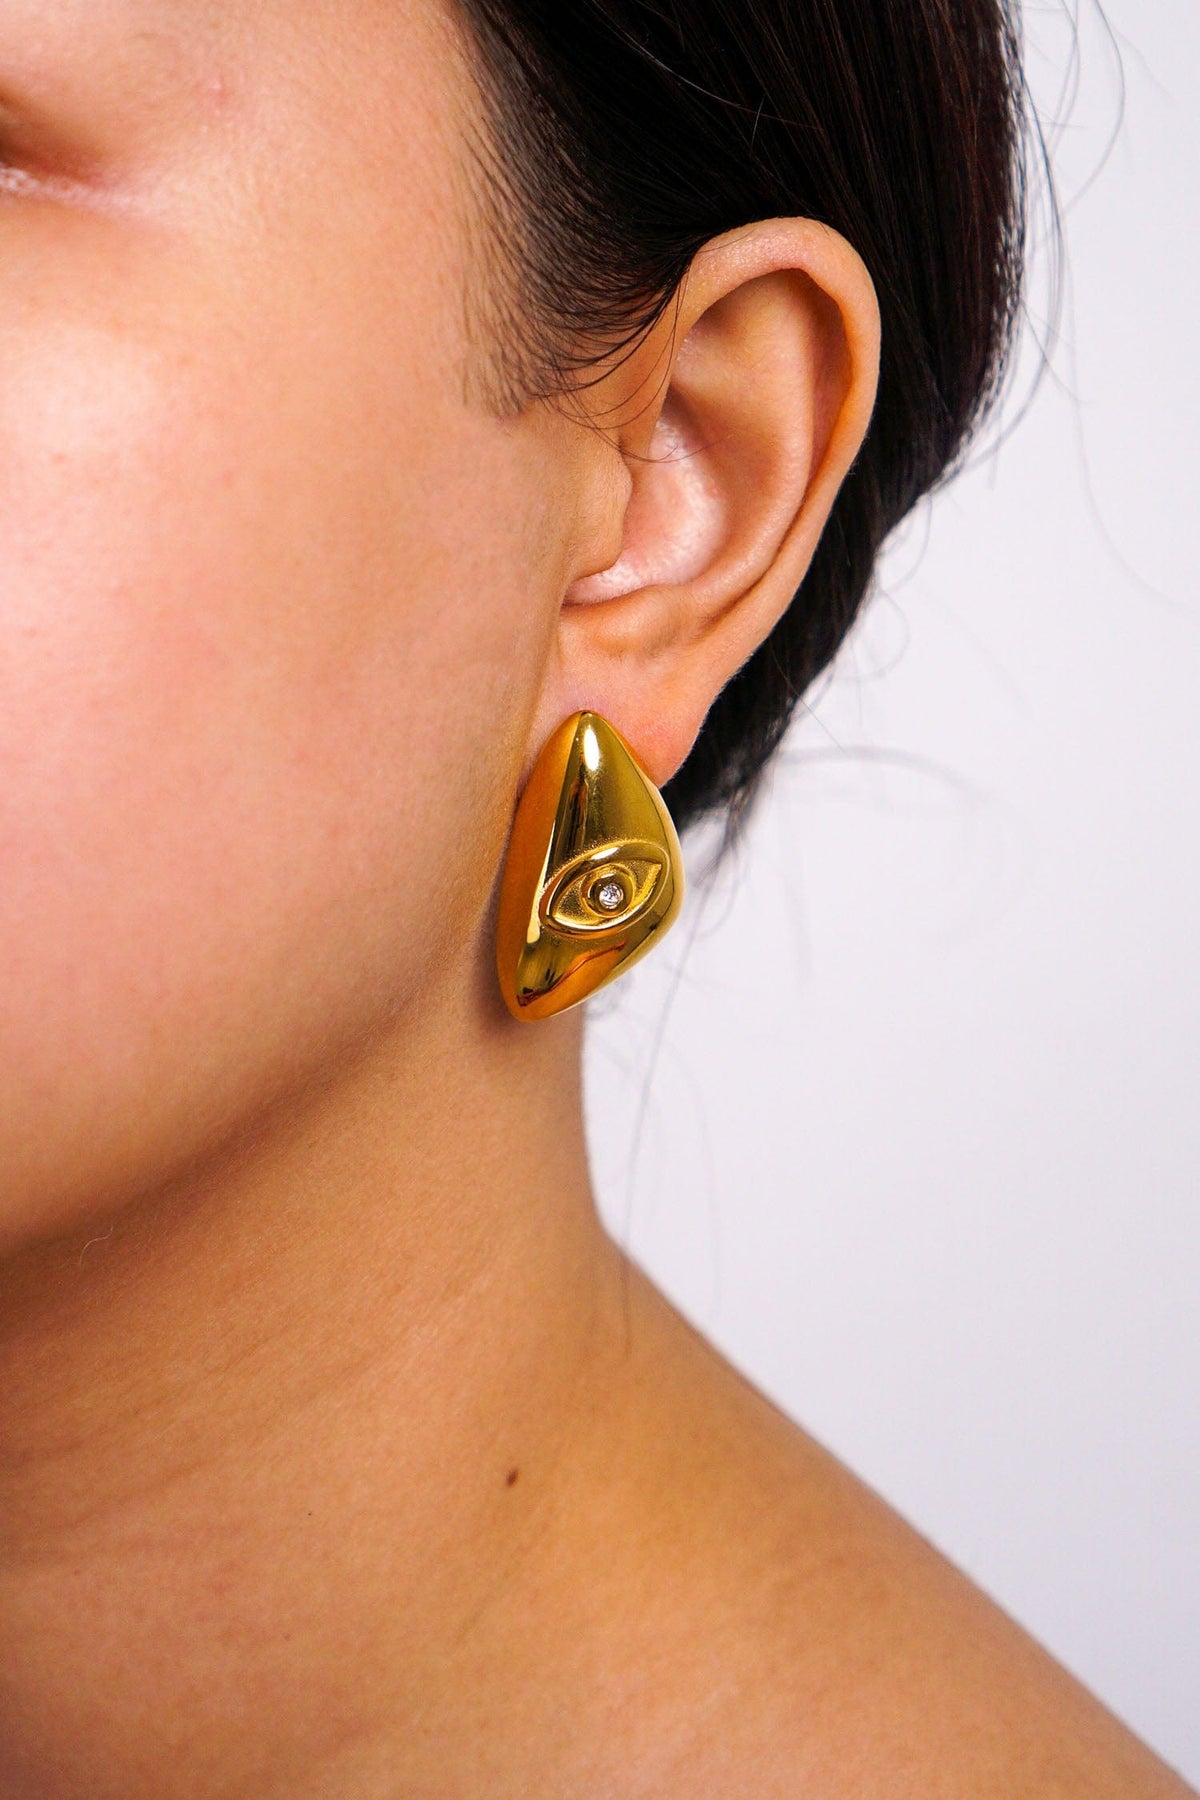 DCD EARRINGS Gold Smooth Diamond Eye Stud Earrings